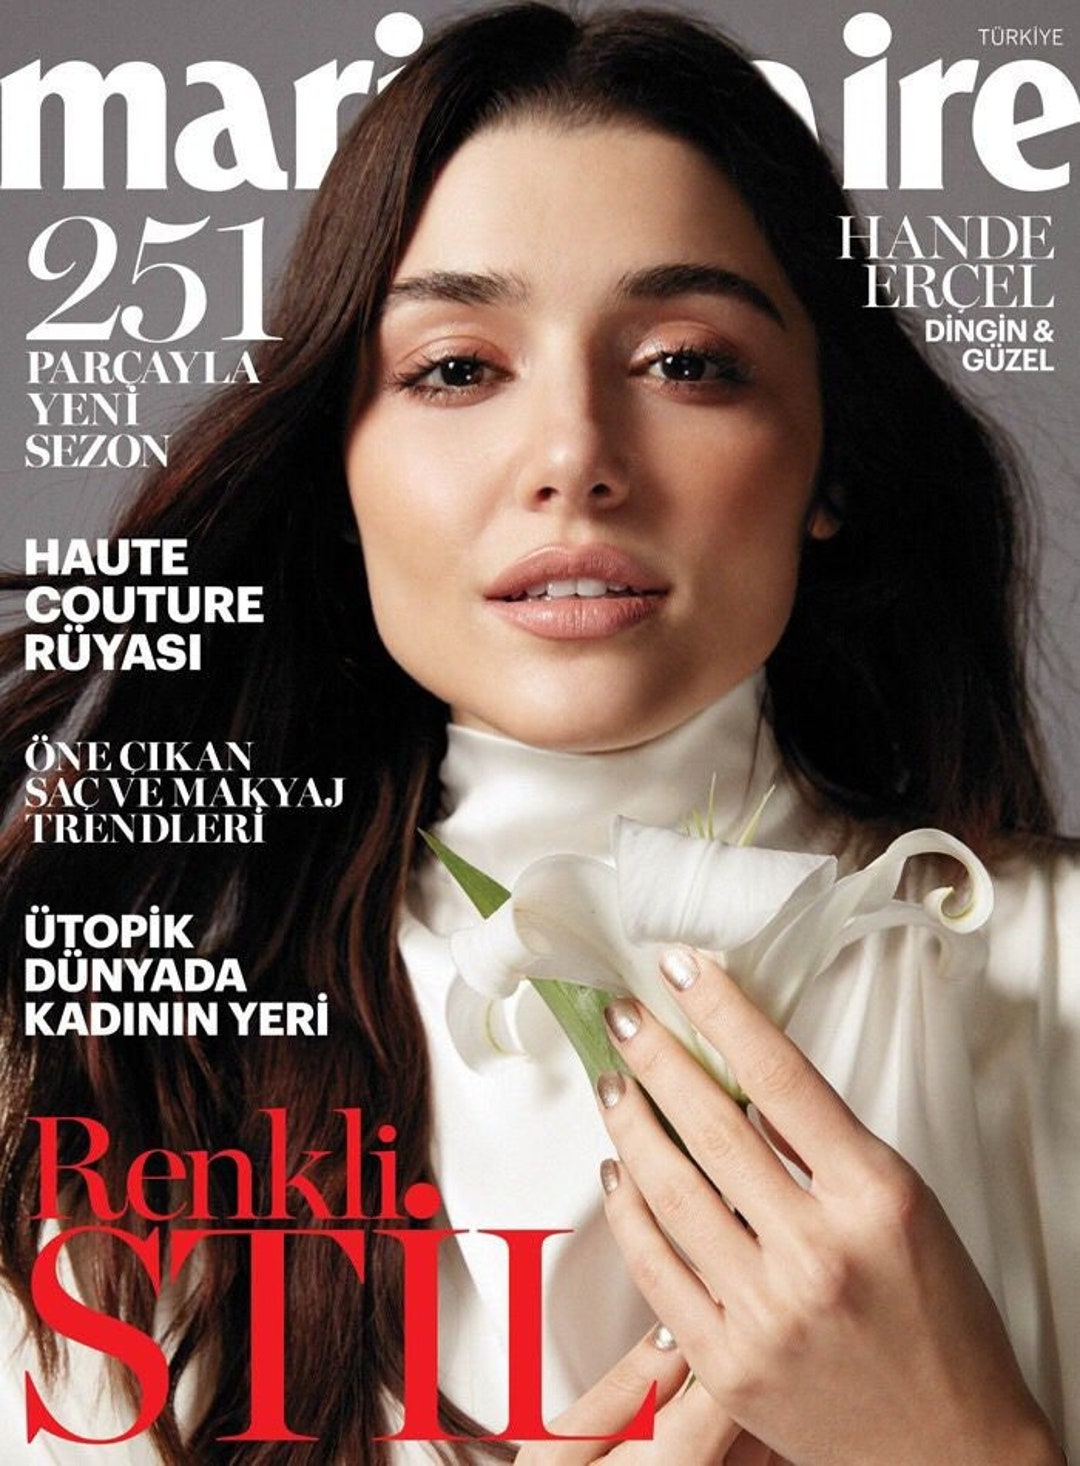 Hande Ercel Sex Videos - HANDE ERCEL Marie Claire Turkish Magazine March 2019 Cover & - Etsy Canada